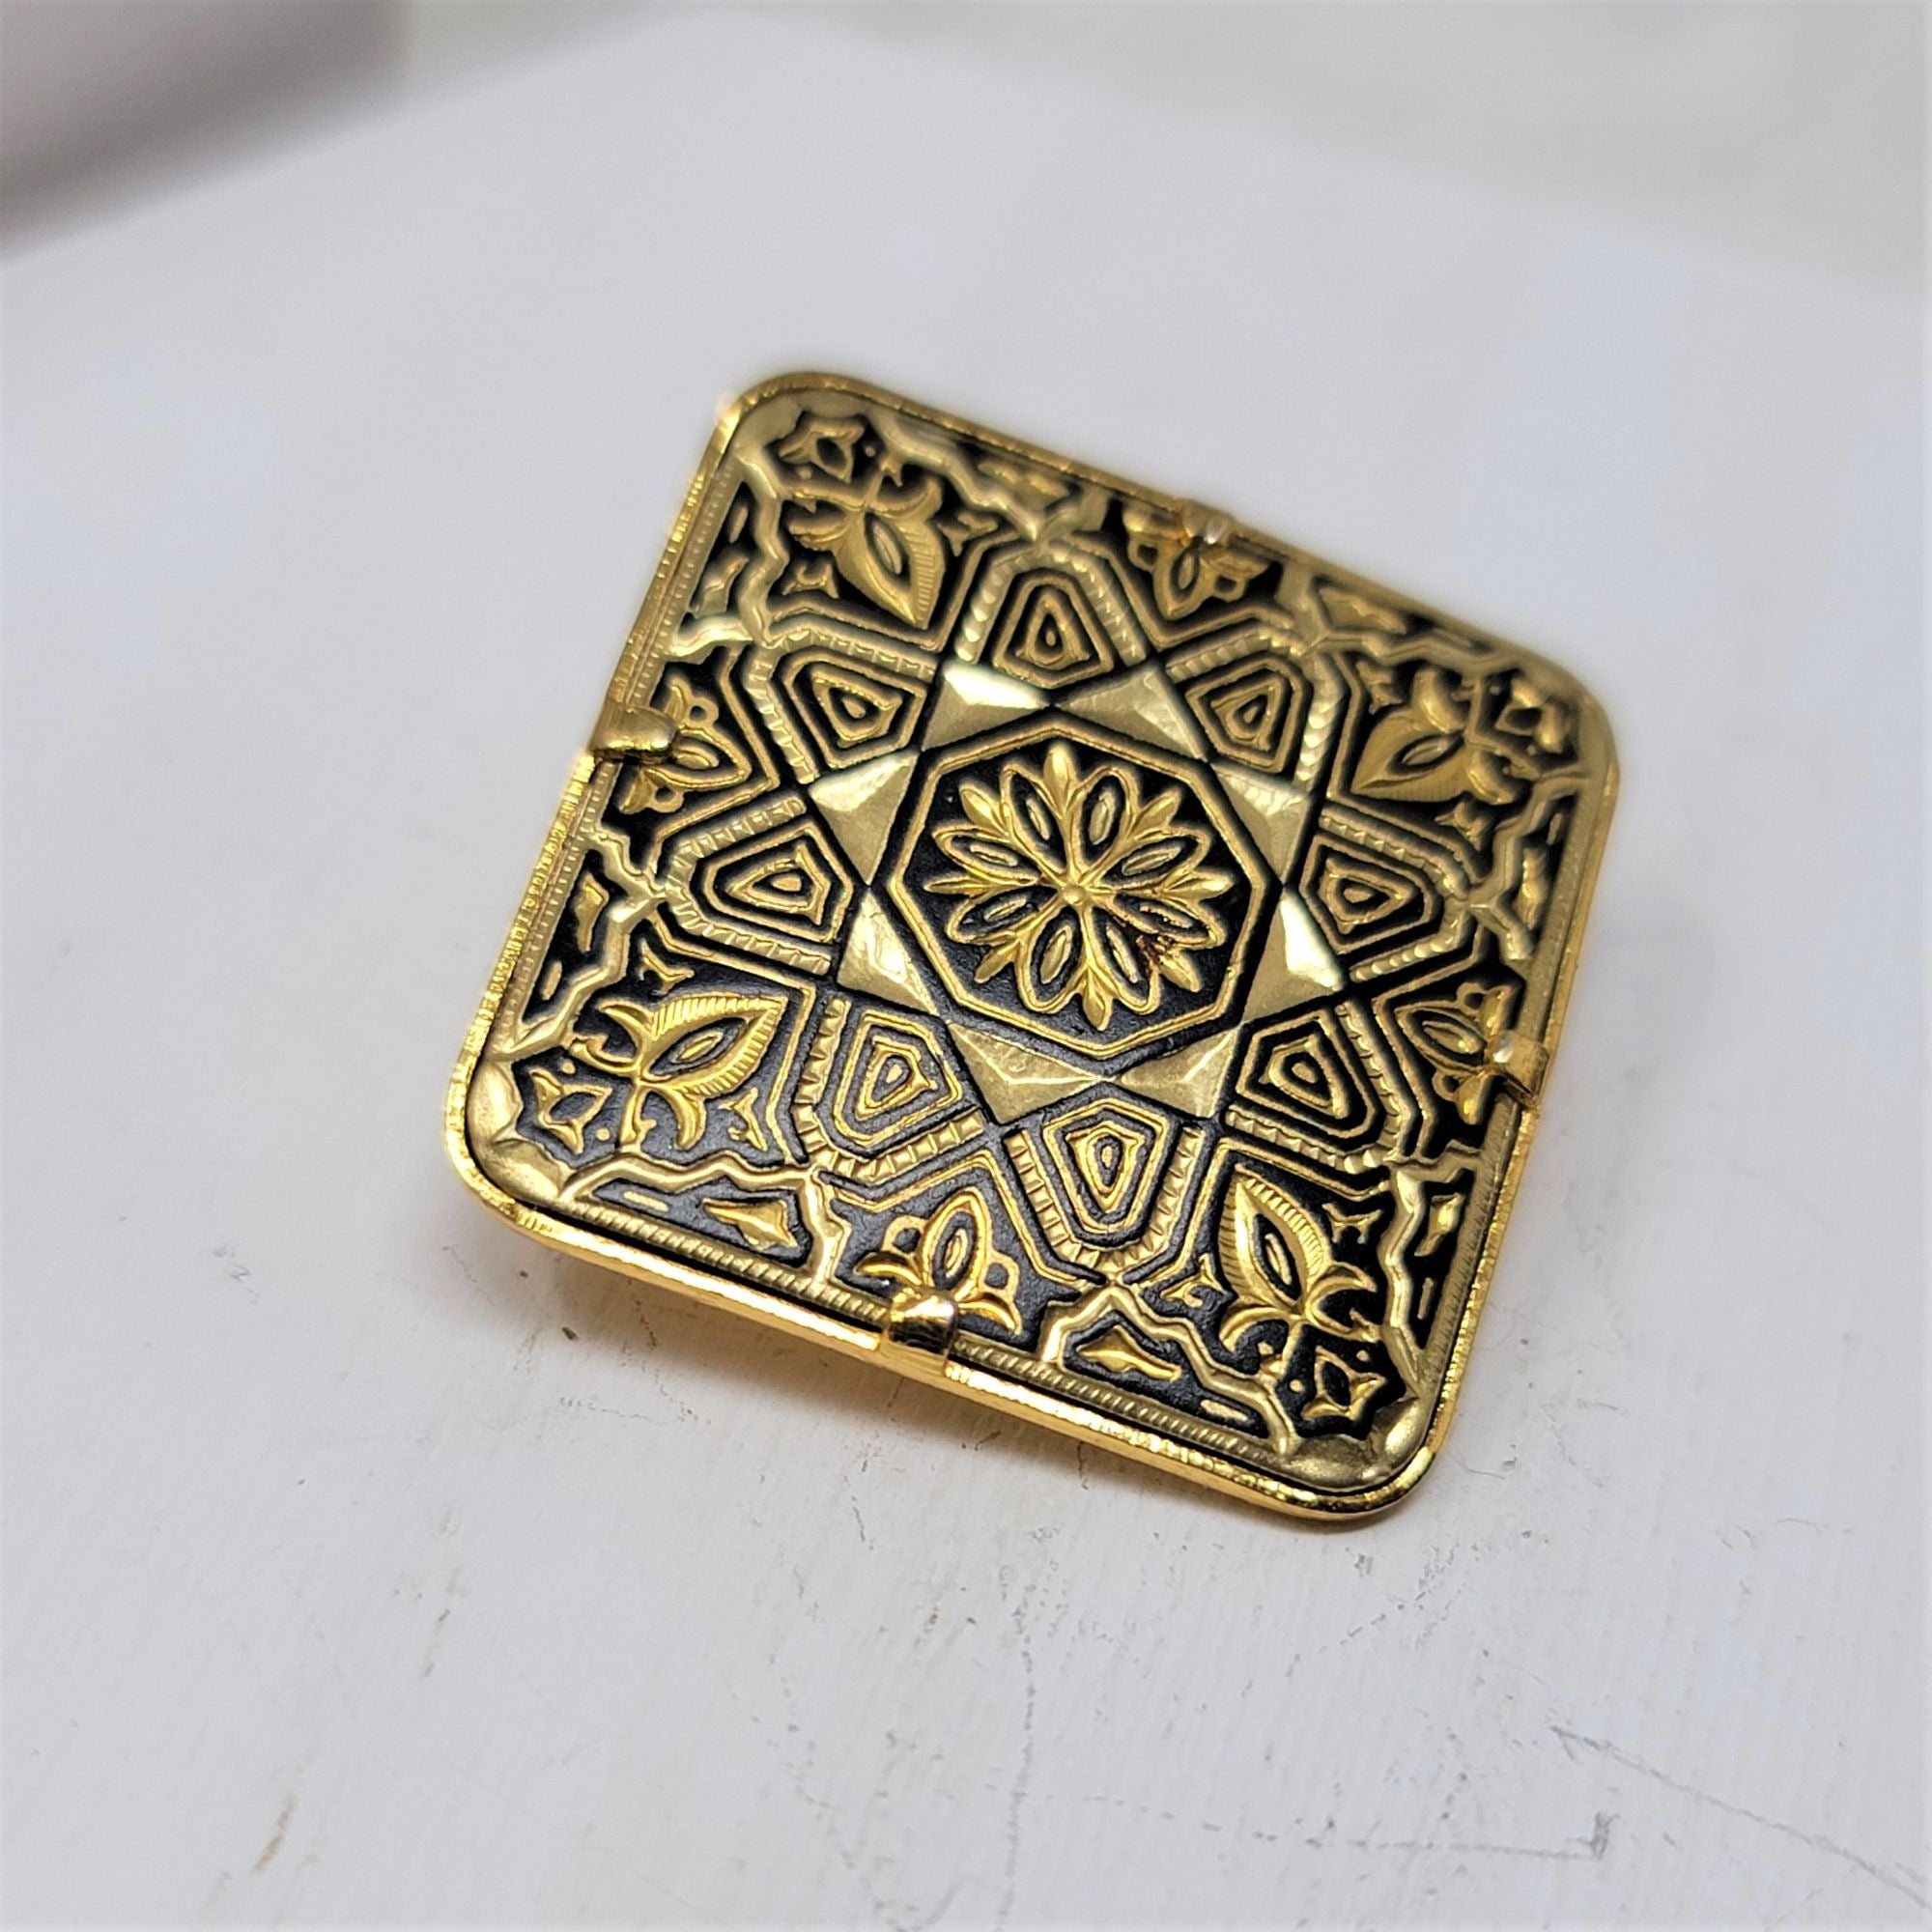 Vintage Gold tone Detailed Design Square Pin Brooch